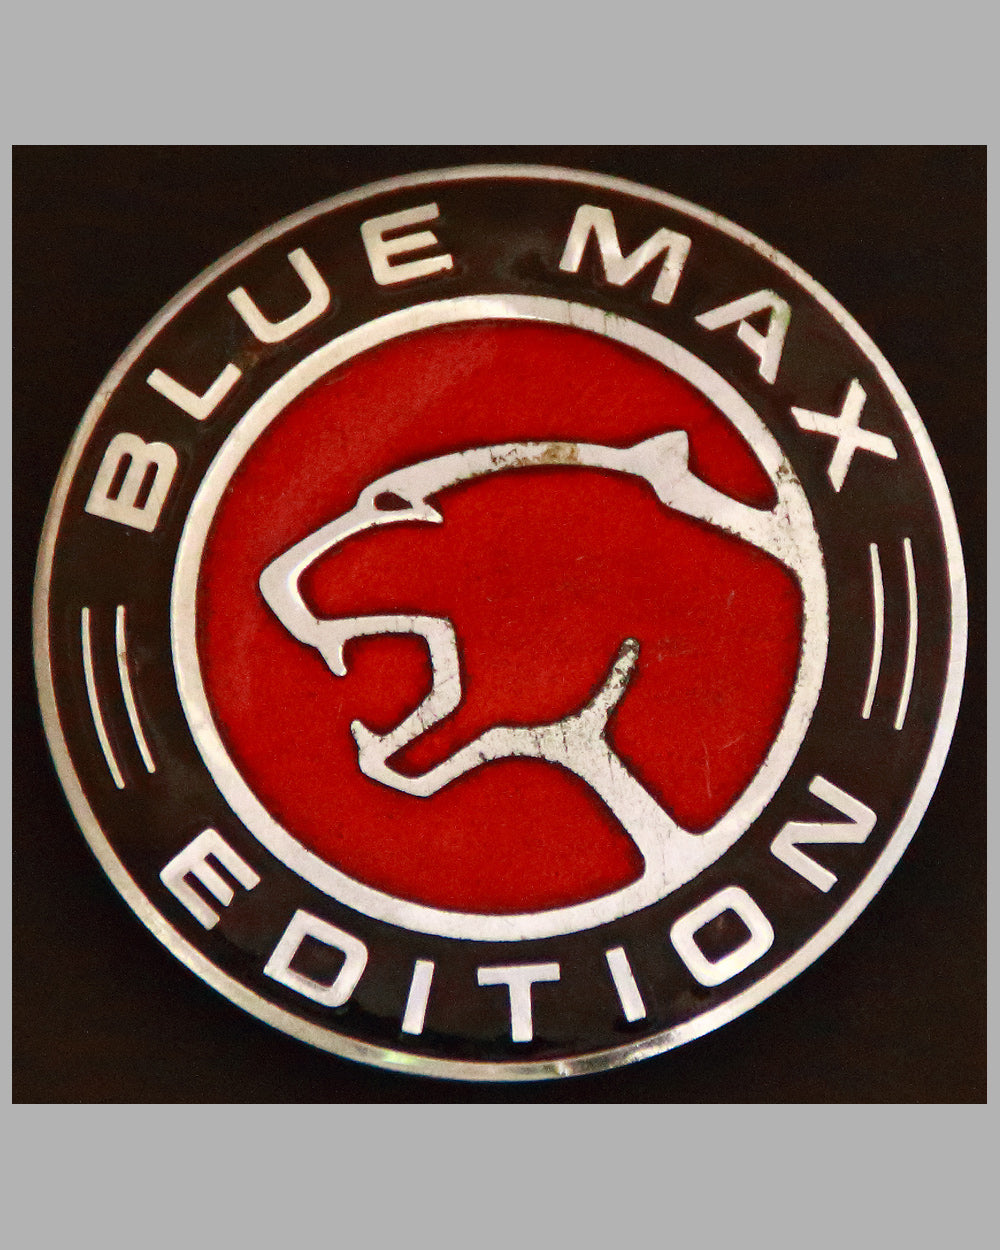 Blue Max Edition badge, late 1980’s (USA)